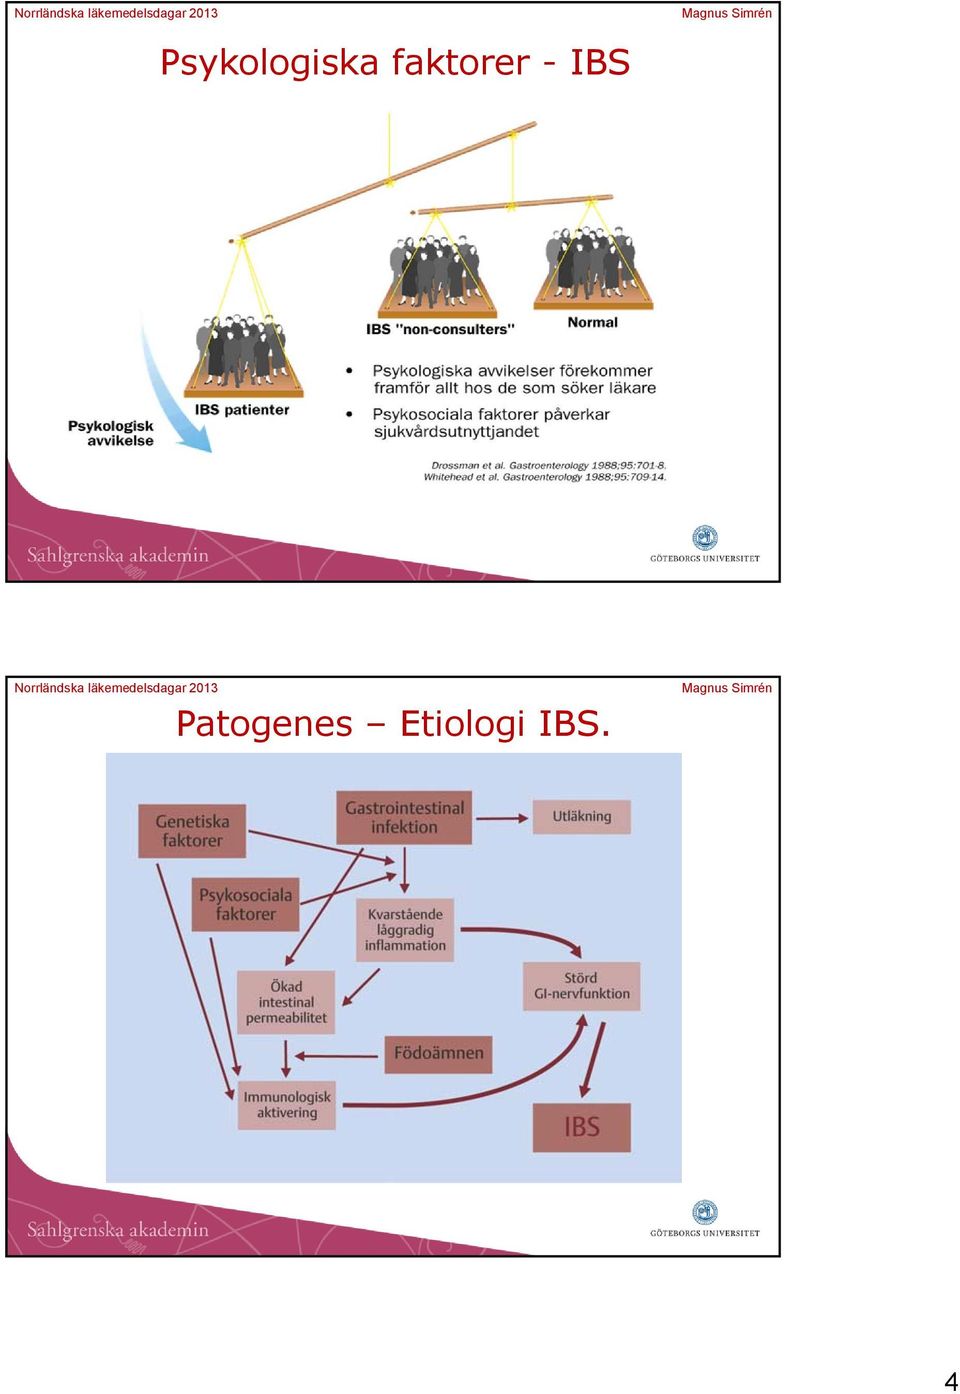 IBS Patogenes